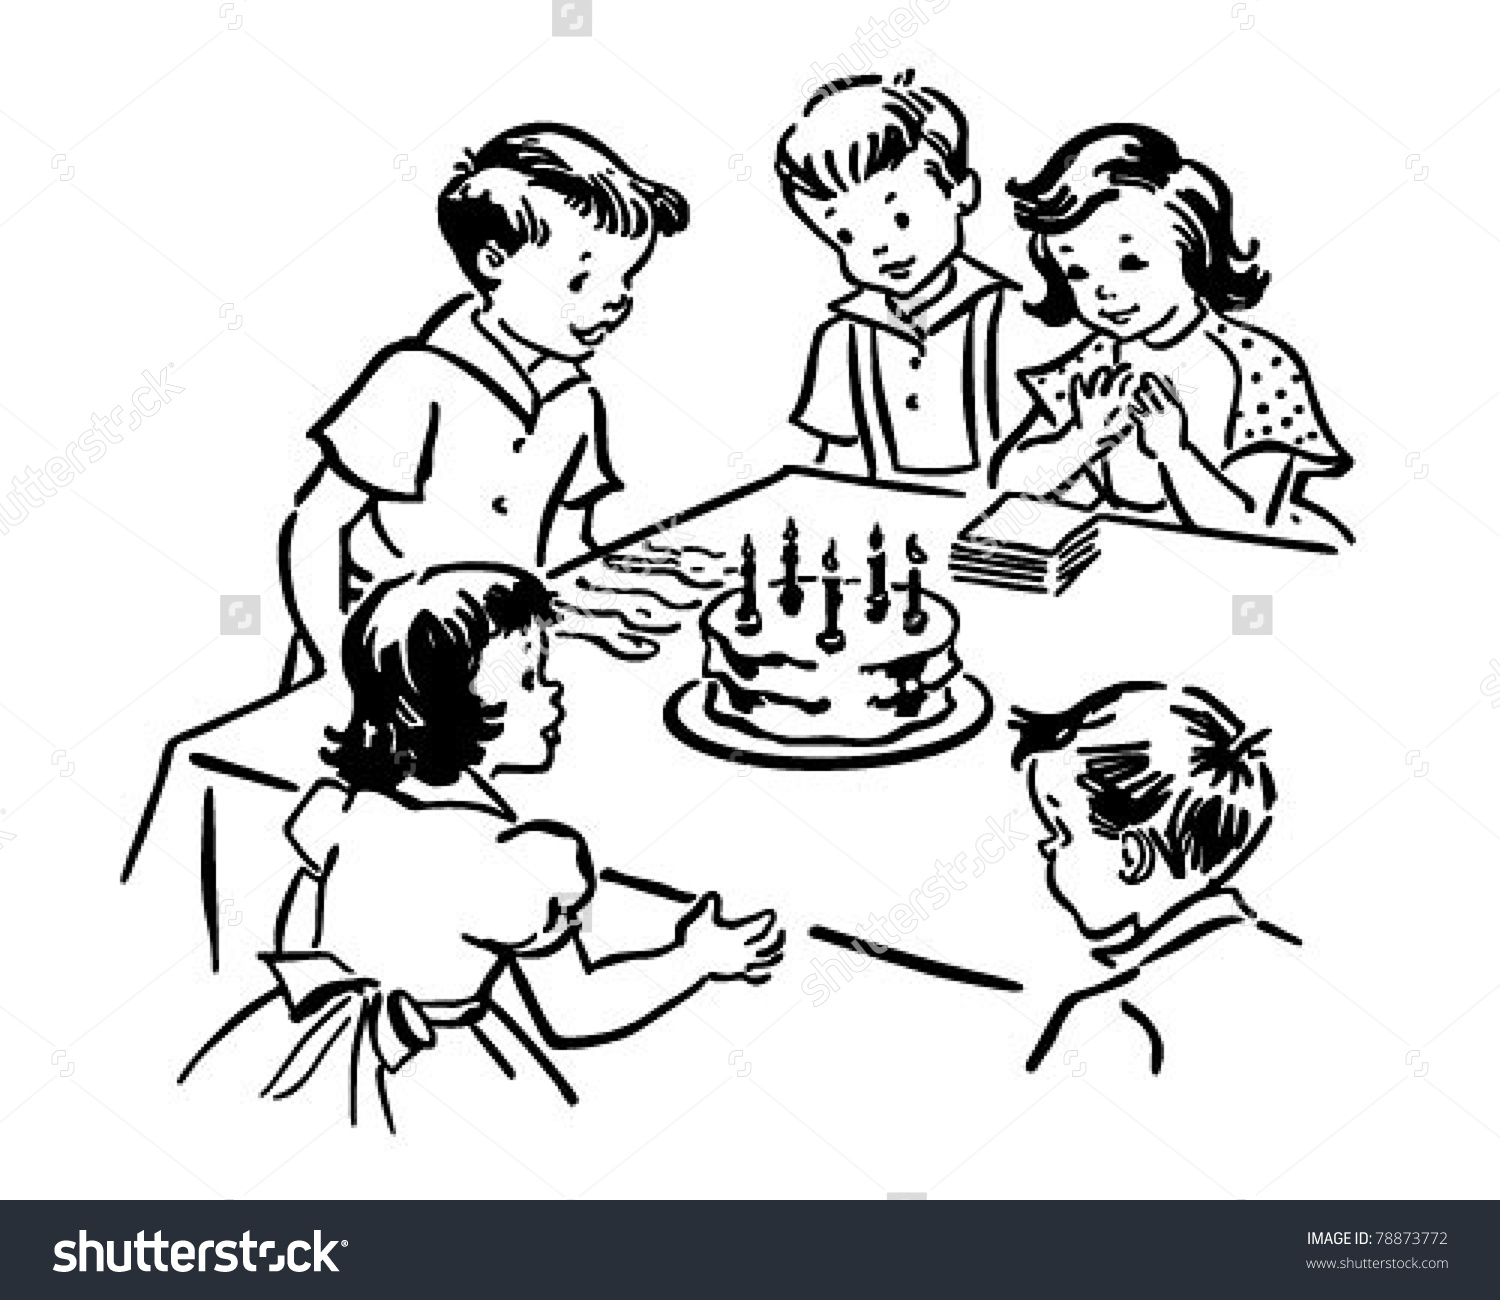 Childrens Birthday Party Retro Clipart Illustration Stock Vector.